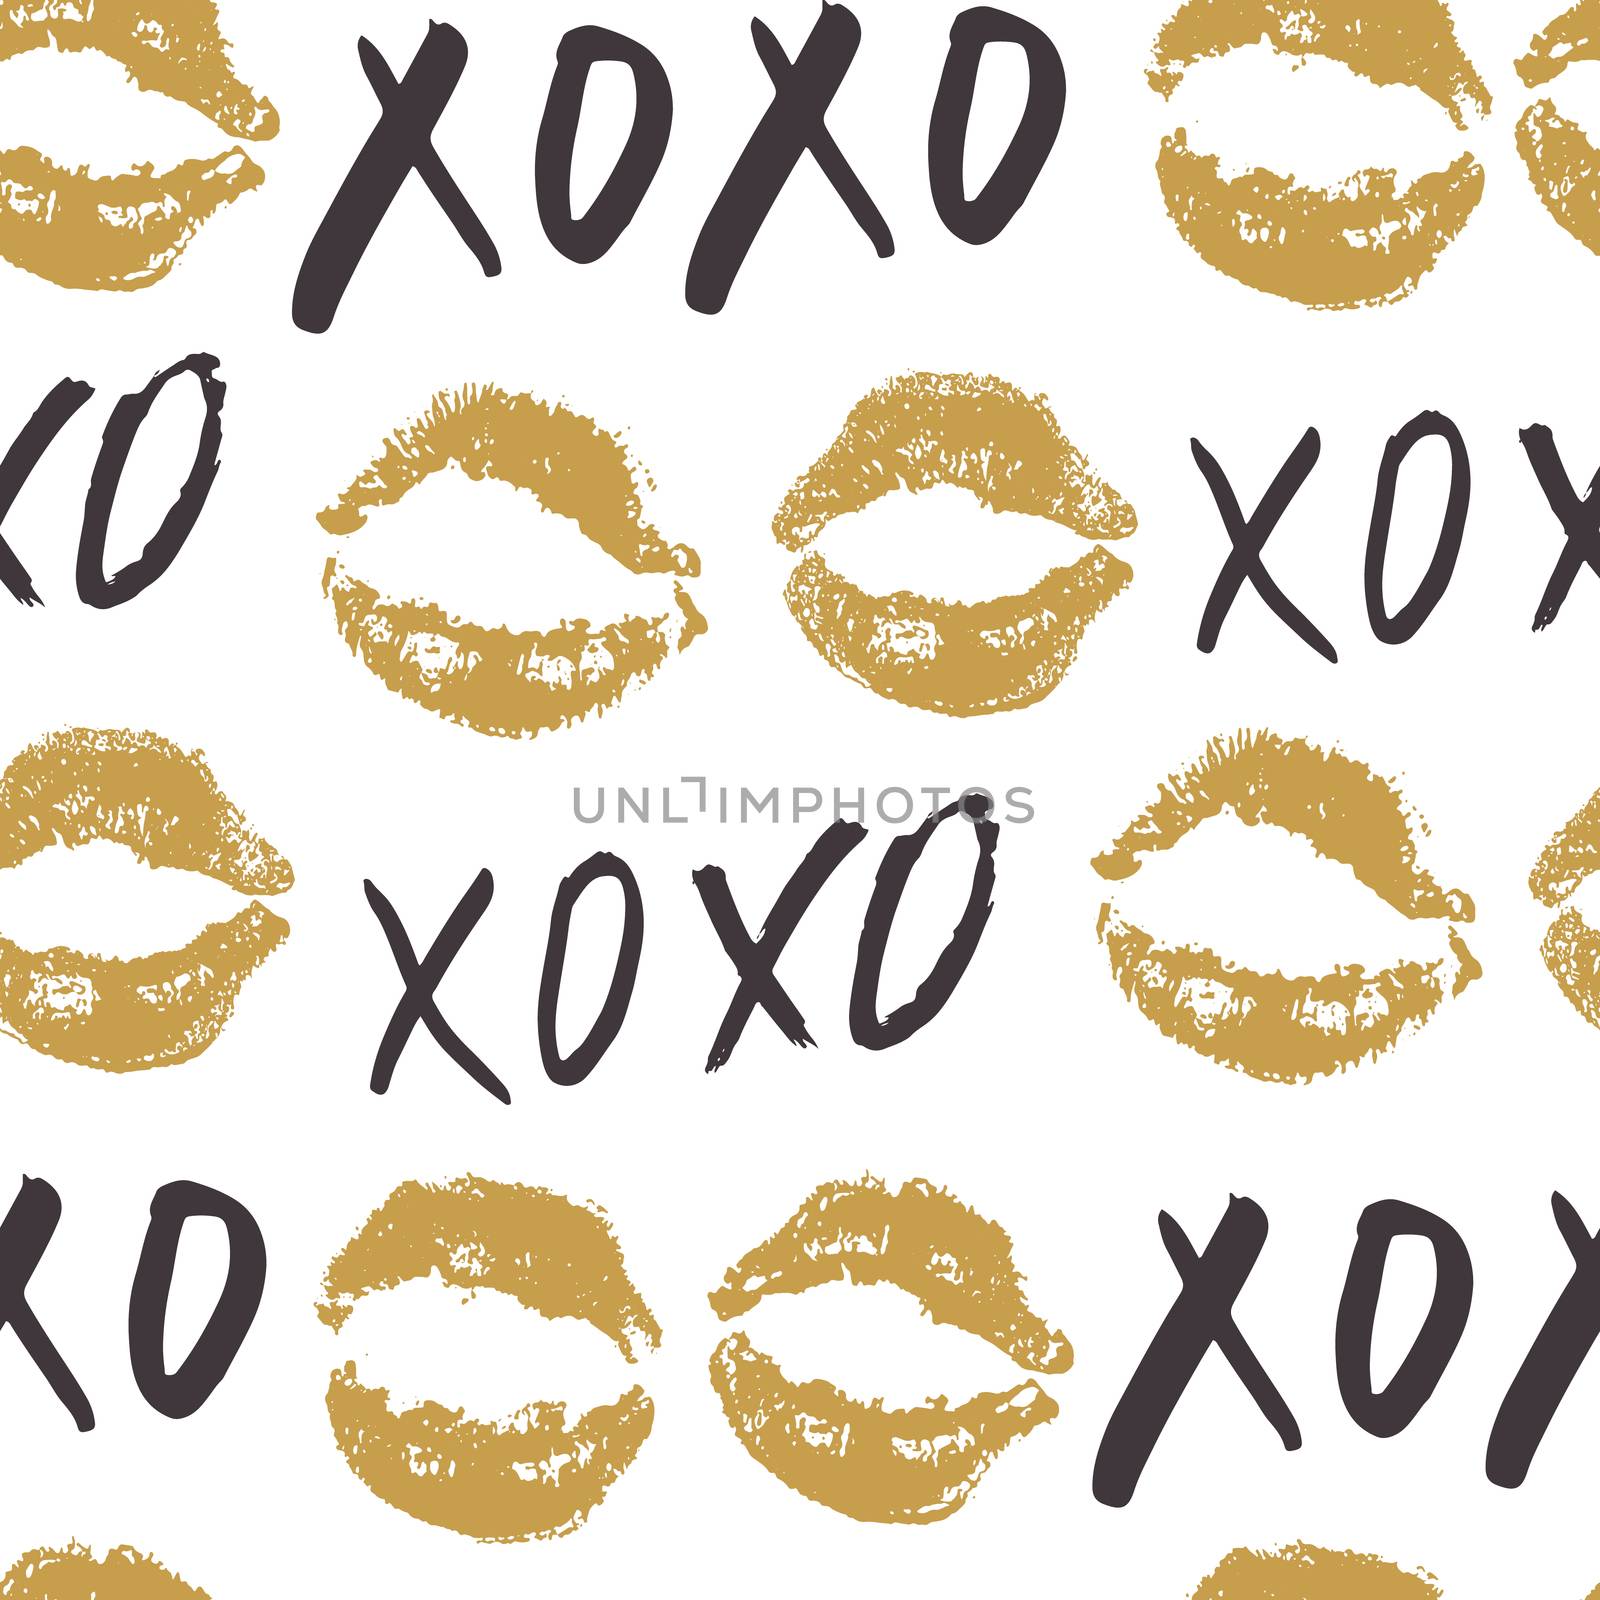 XOXO brush lettering signs seamless pattern, Grunge calligraphic hugs and kisses Phrase, Internet slang abbreviation XOXO symbols, vector illustration isolated on white background